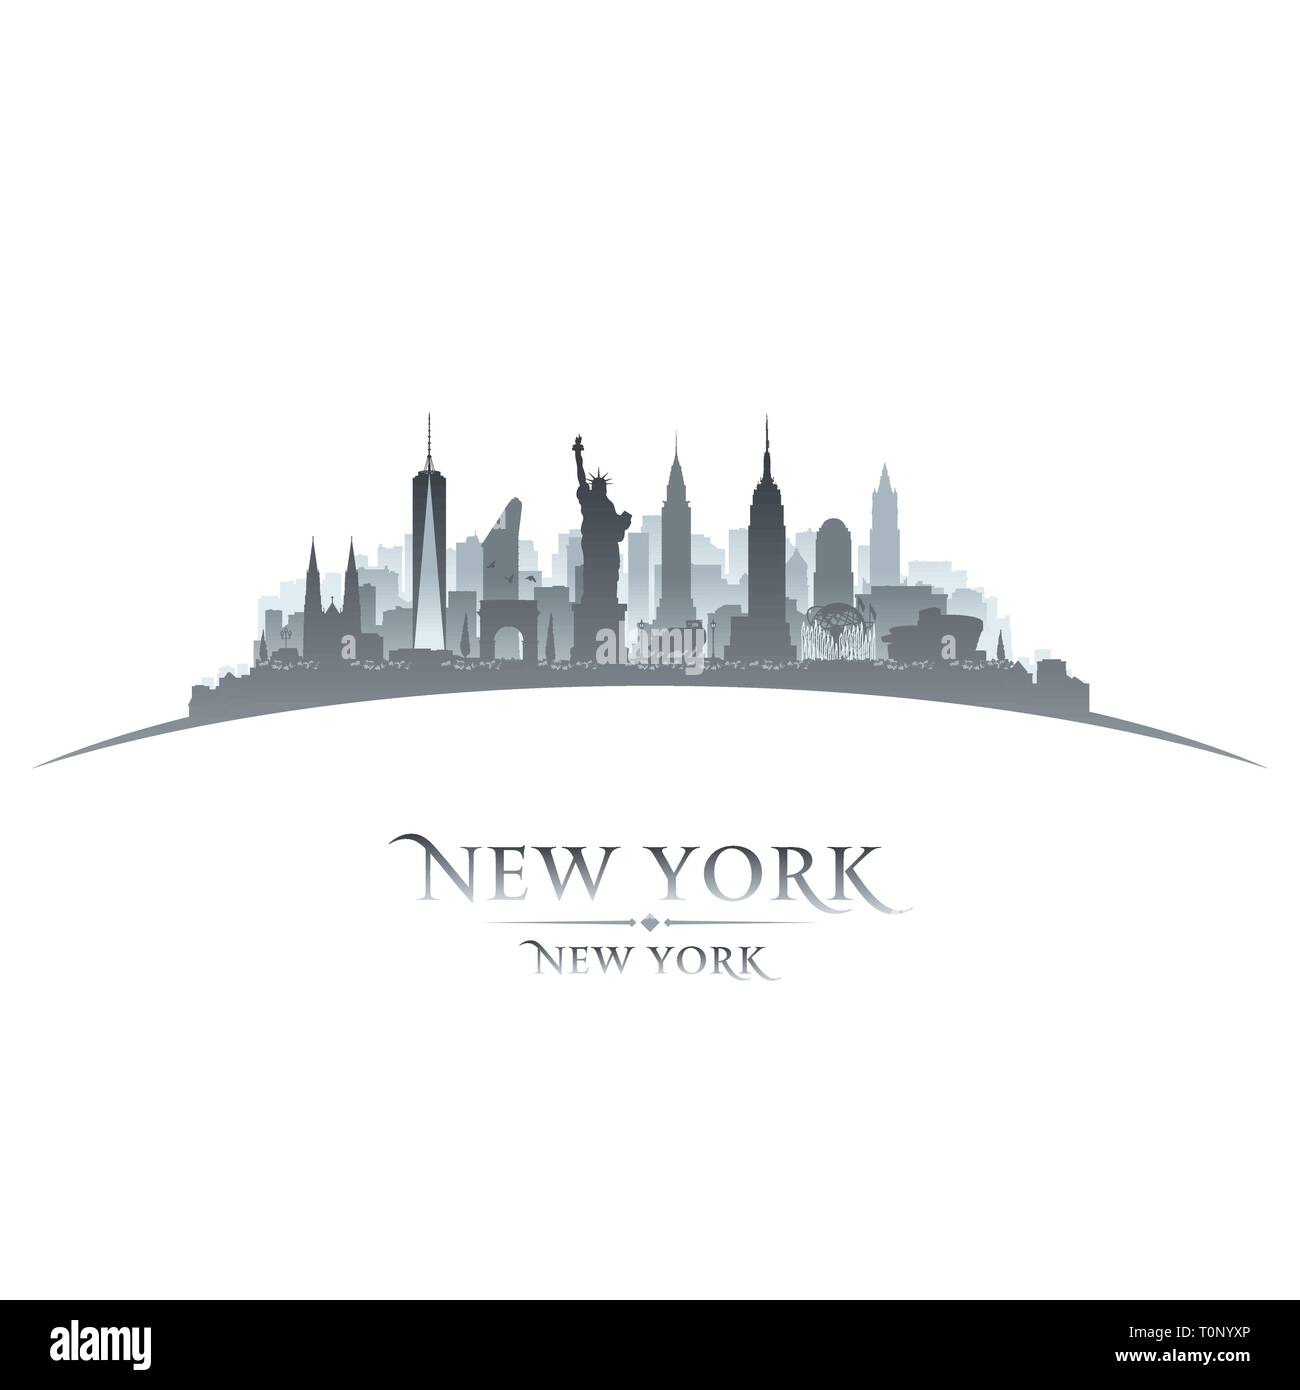 new york city skyline vector